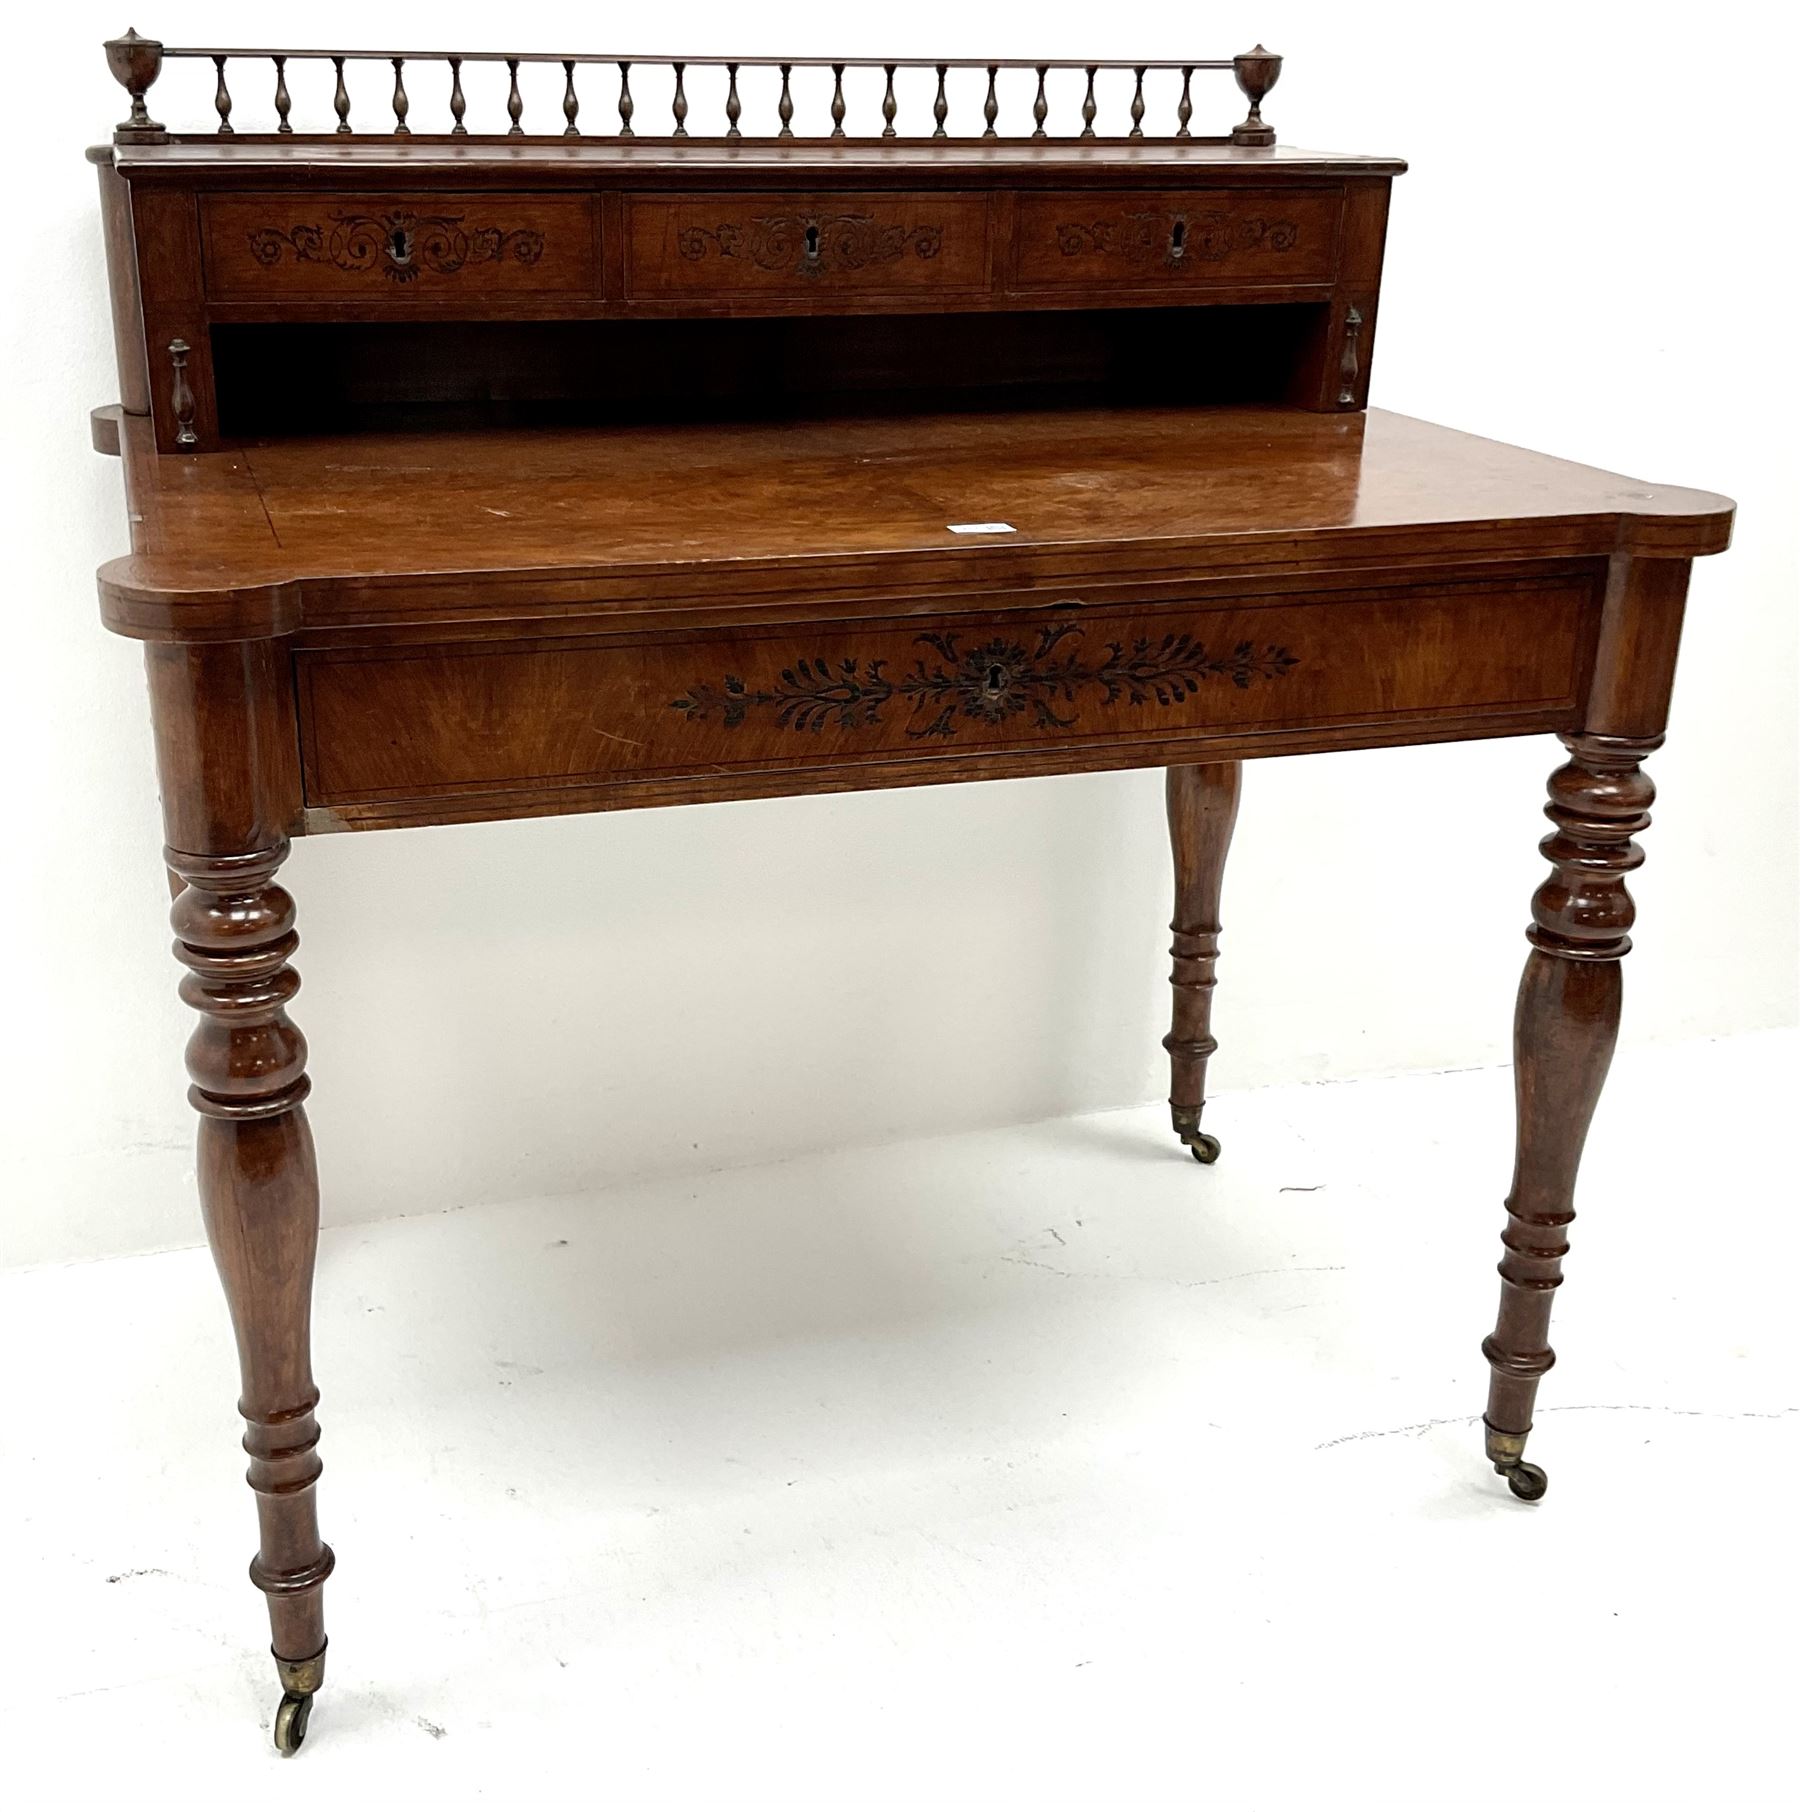 19th century inlaid grained oak writing desk